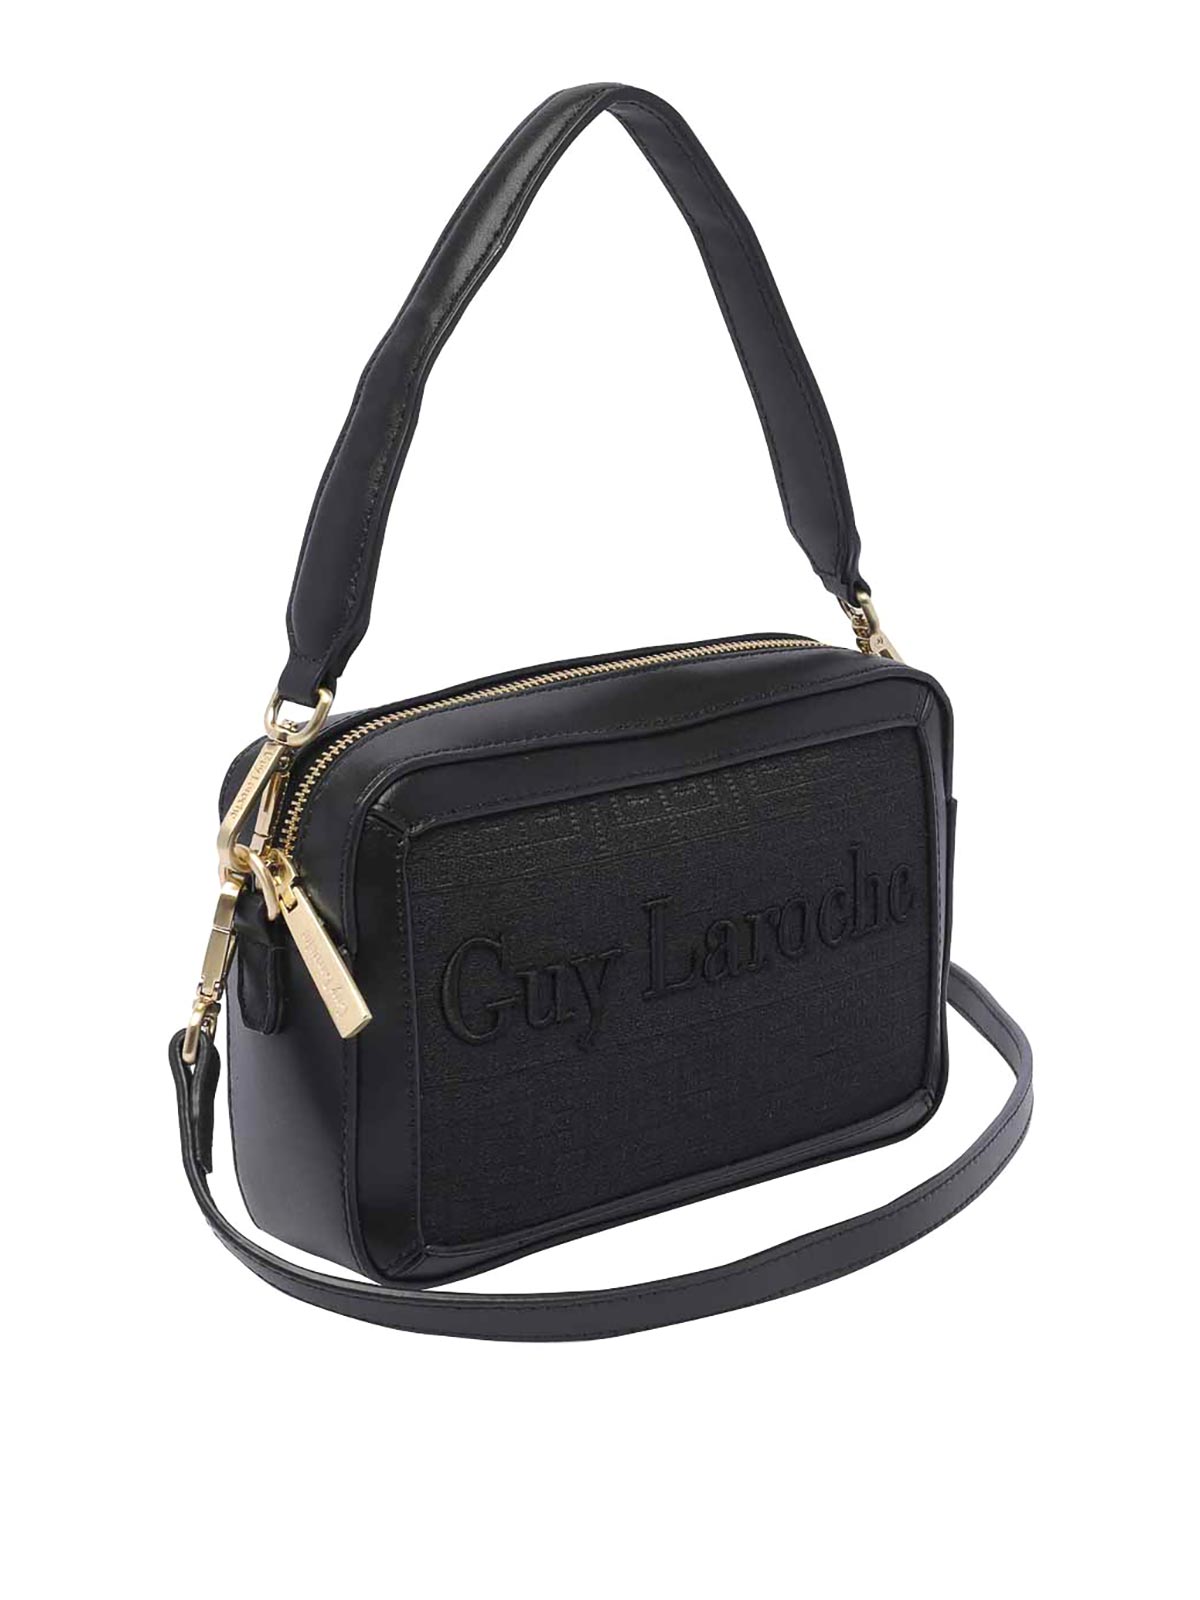 Women's Guy Laroche Shoulder bag, size Mini (Black)